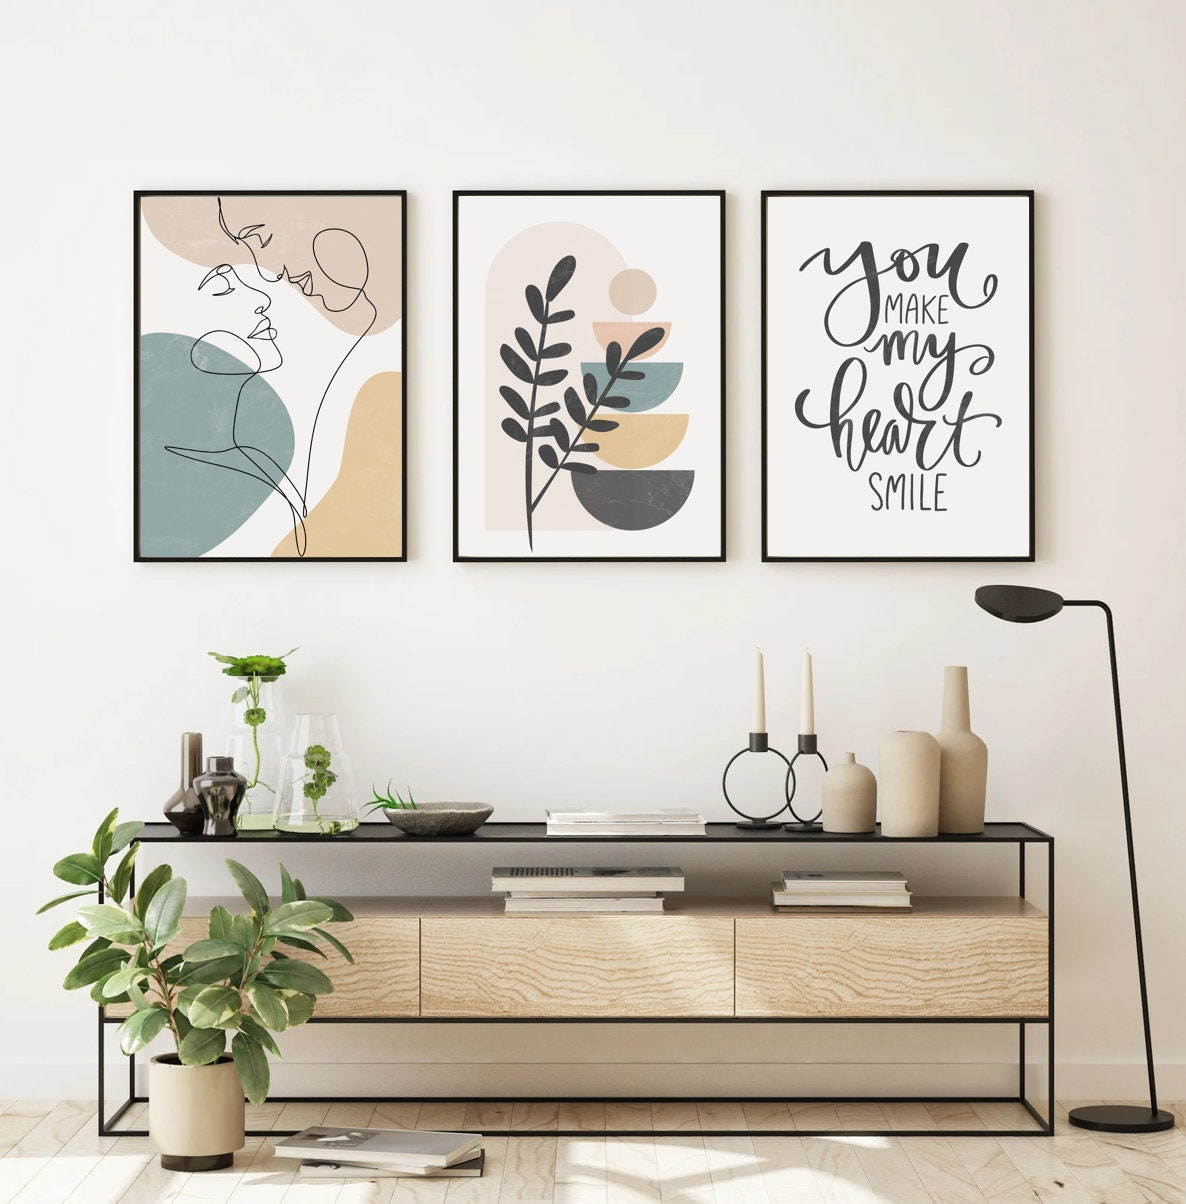  Simplicity Fashion Canvas Wall Art Prints Set of 3